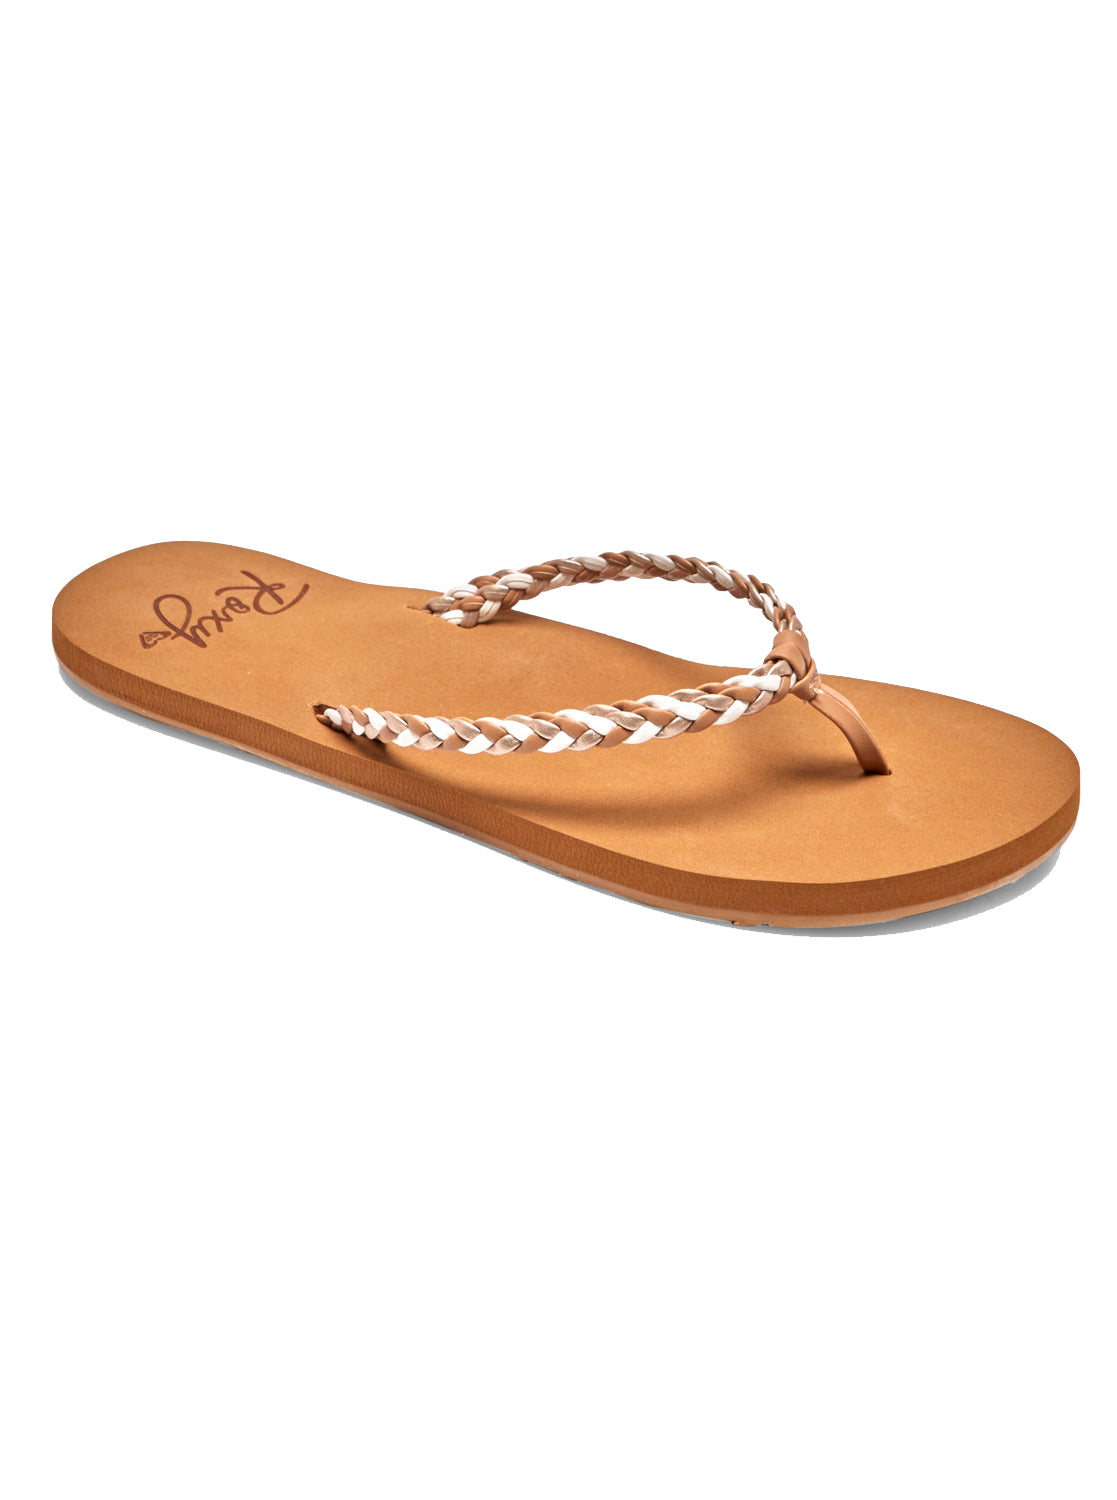 Roxy Costas Womens Sandal TG1-Tan-Gold 5